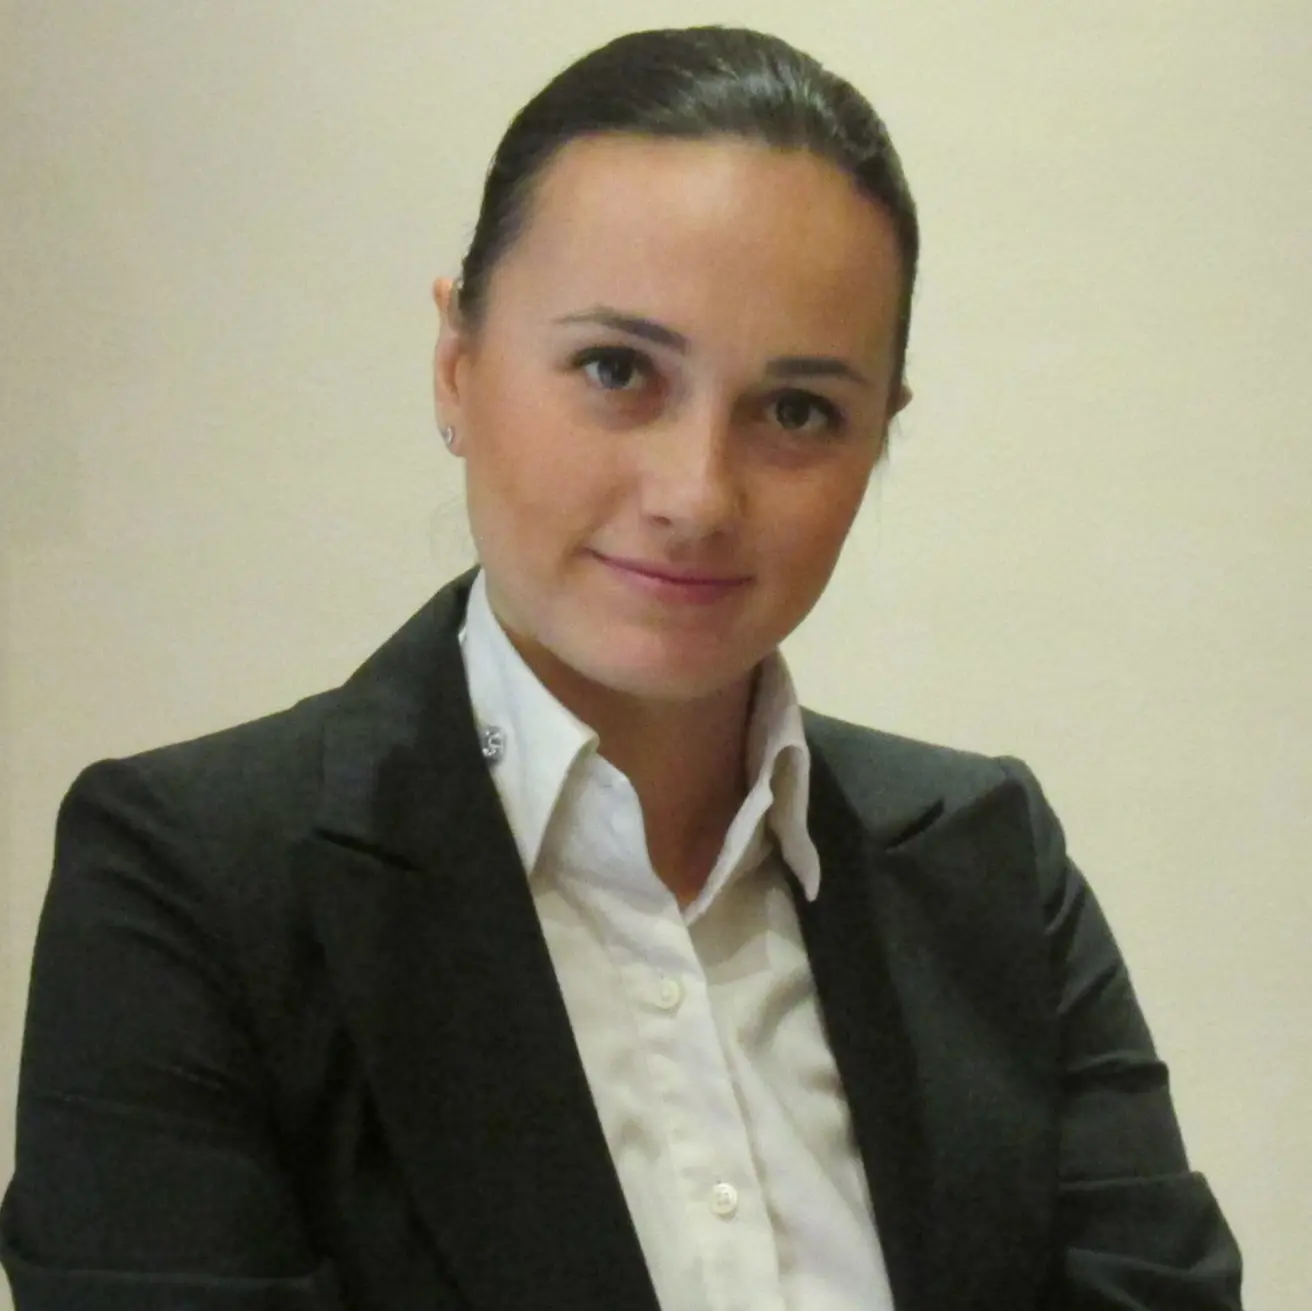 Irena Knezevic